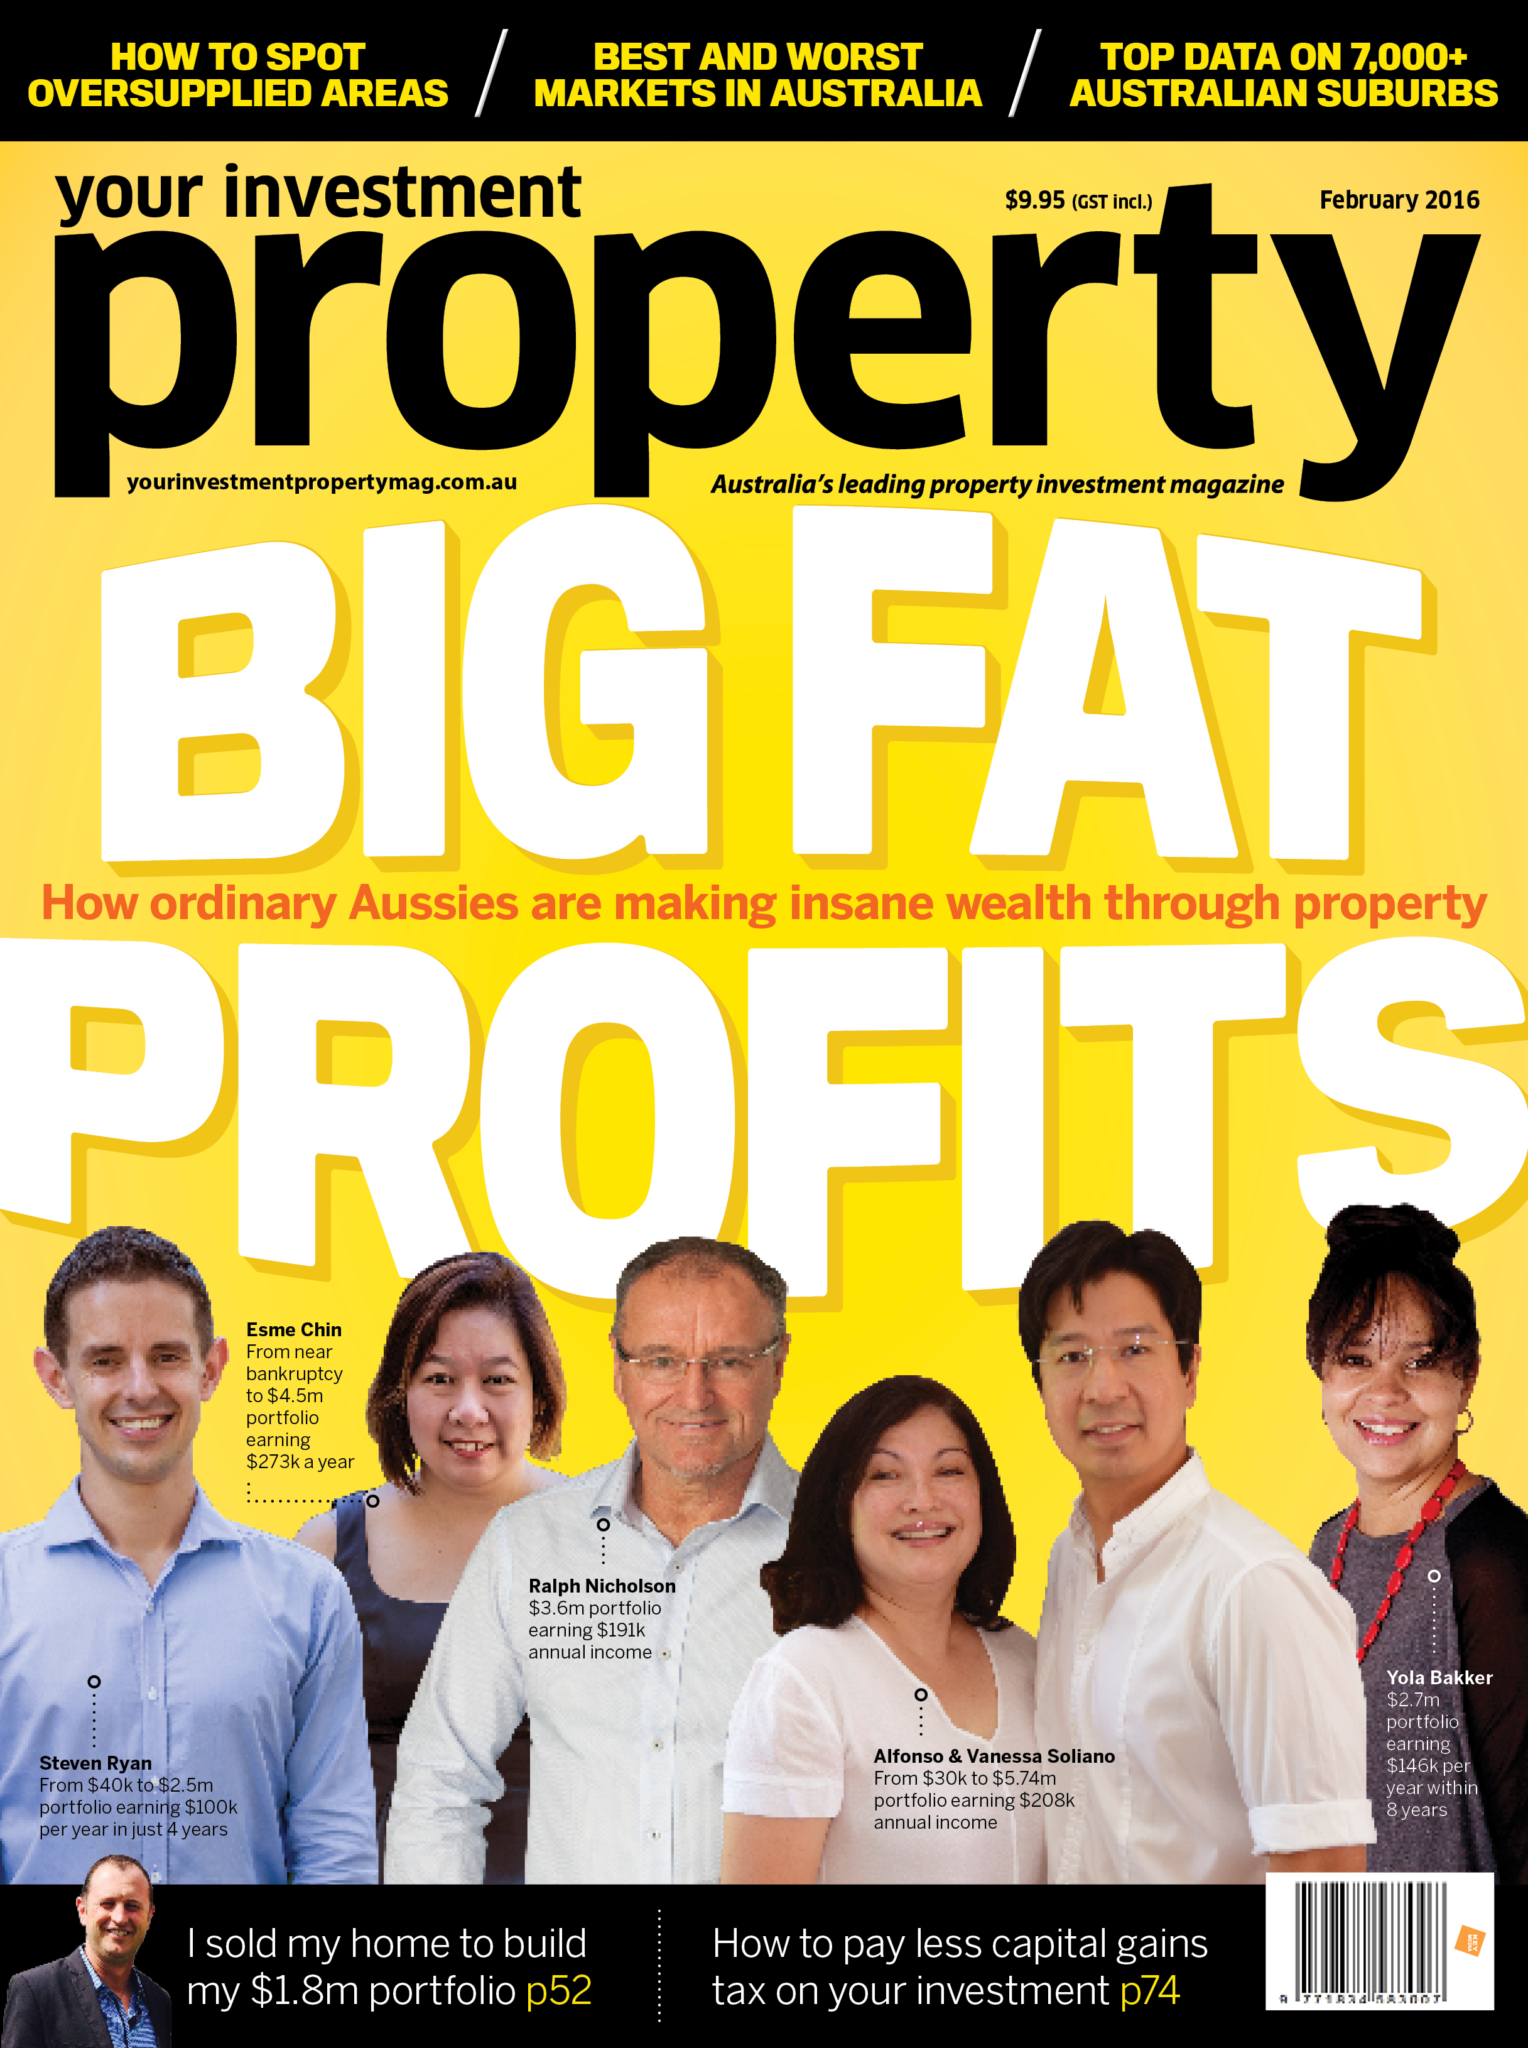 Real Wealth Australia's Client David Watkins featured in YIP Magazine